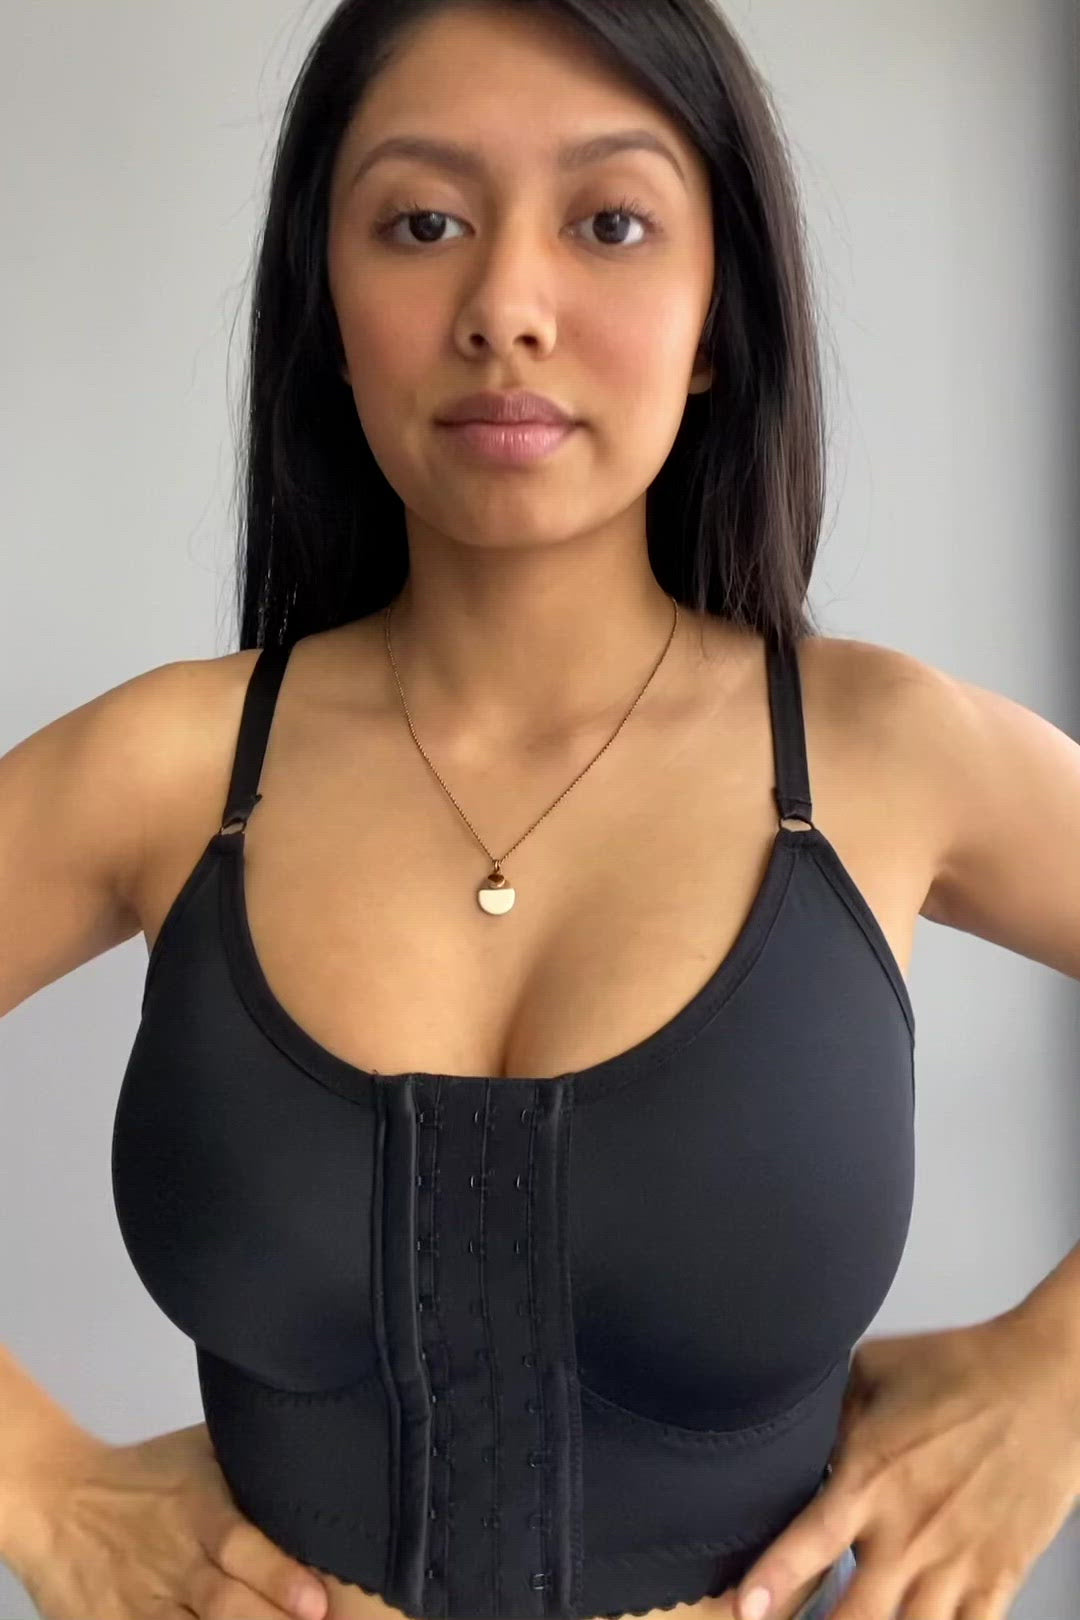 Custom Bra Fitting in Omaha  Women's fittings, specialty bra